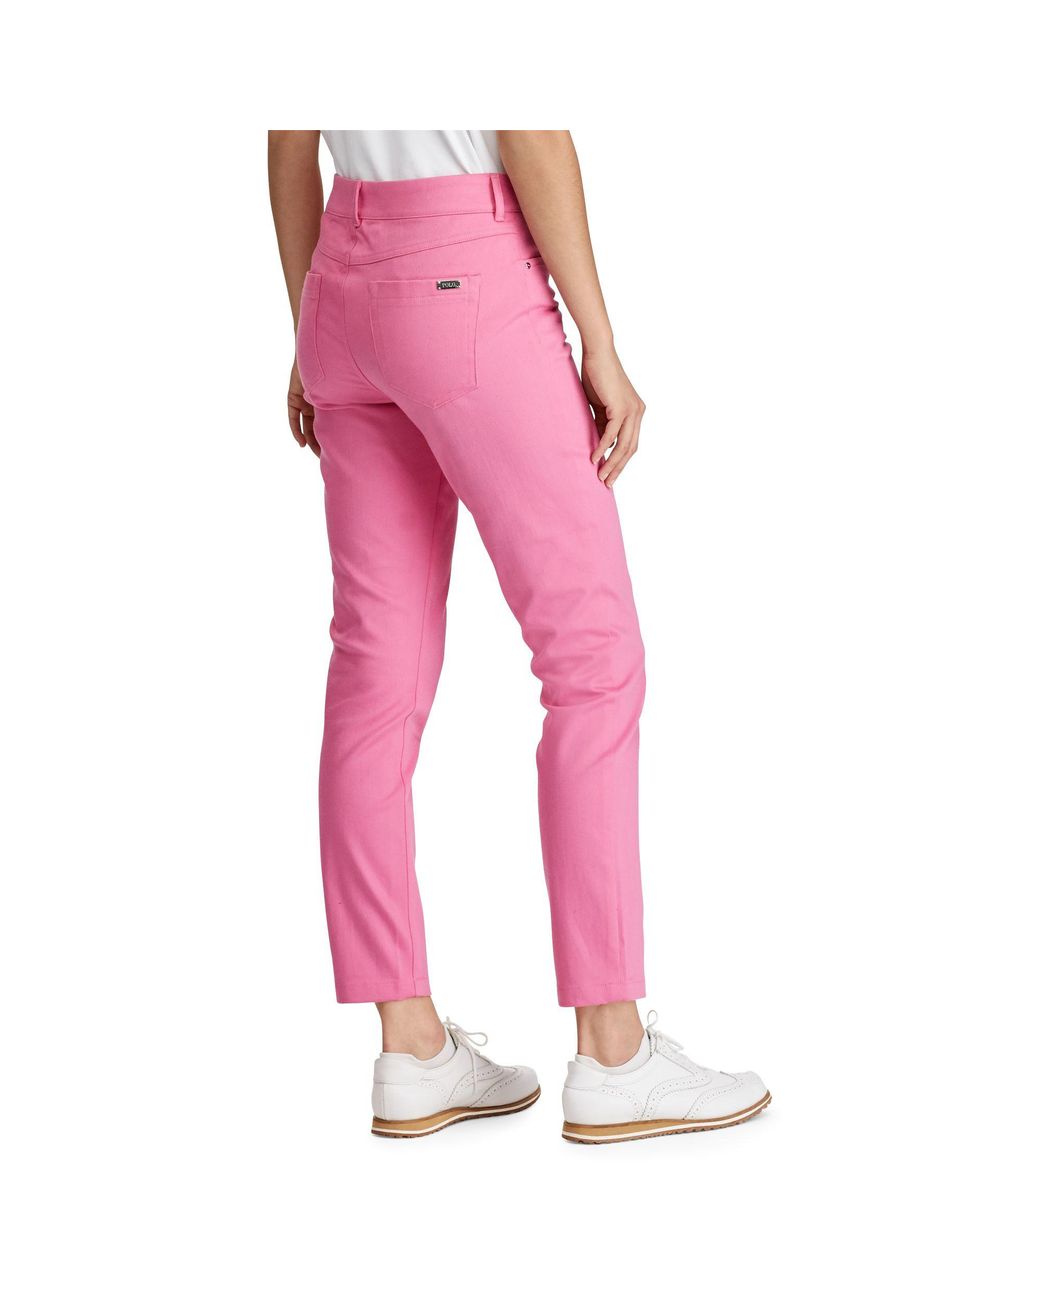 Ralph Lauren Golf Stretch Twill Golf Pant in Pink